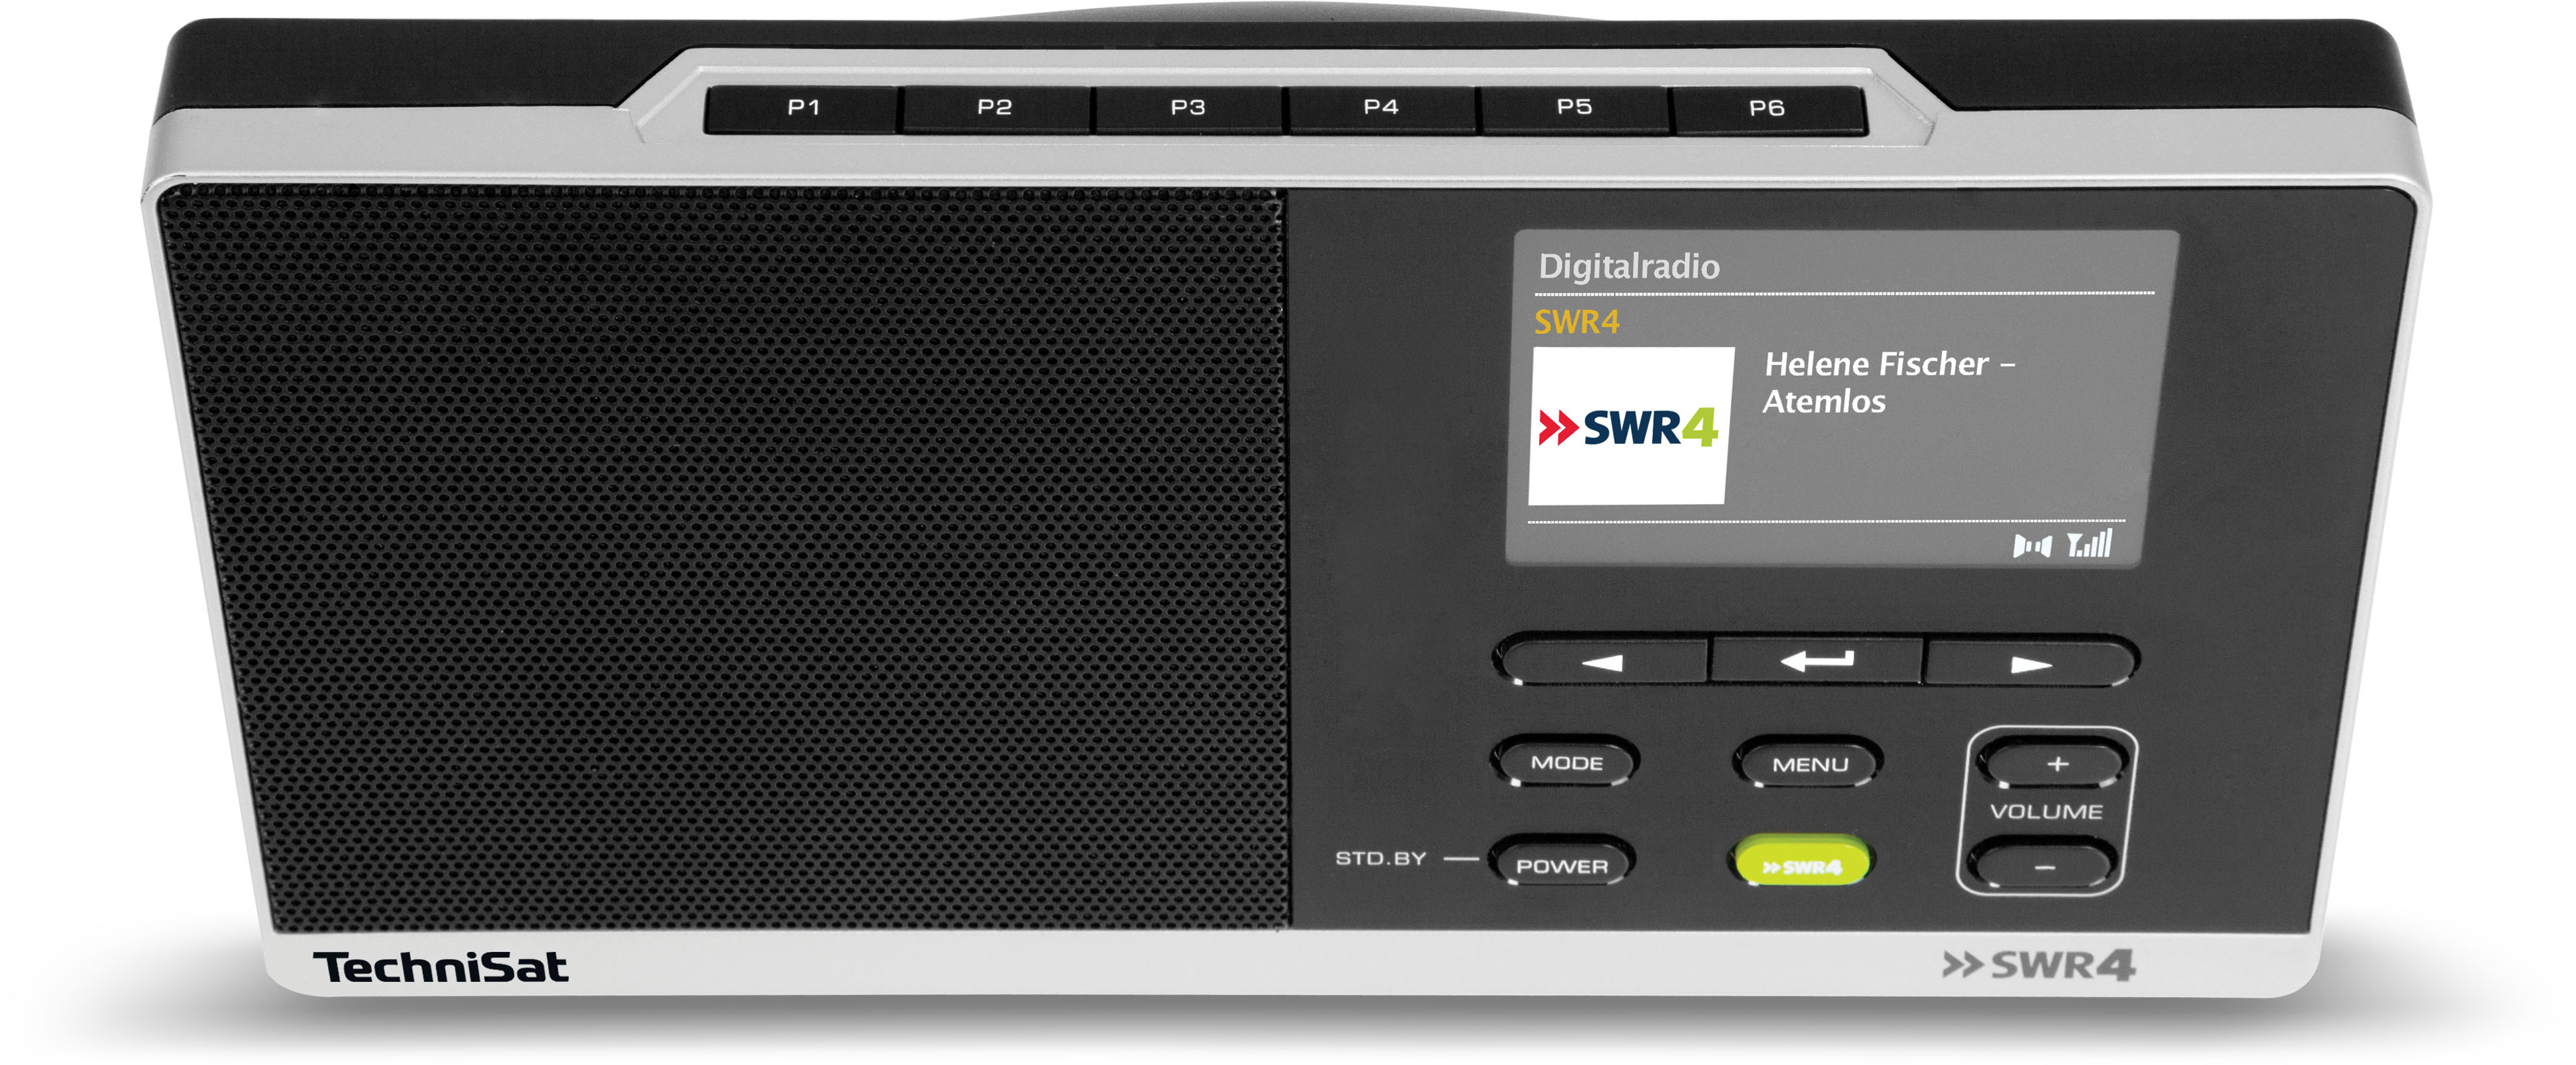 TECHNISAT DIGITRADIO 215 SWR4 Schwarz FM, DAB, Radio, DAB+, EDITION digital